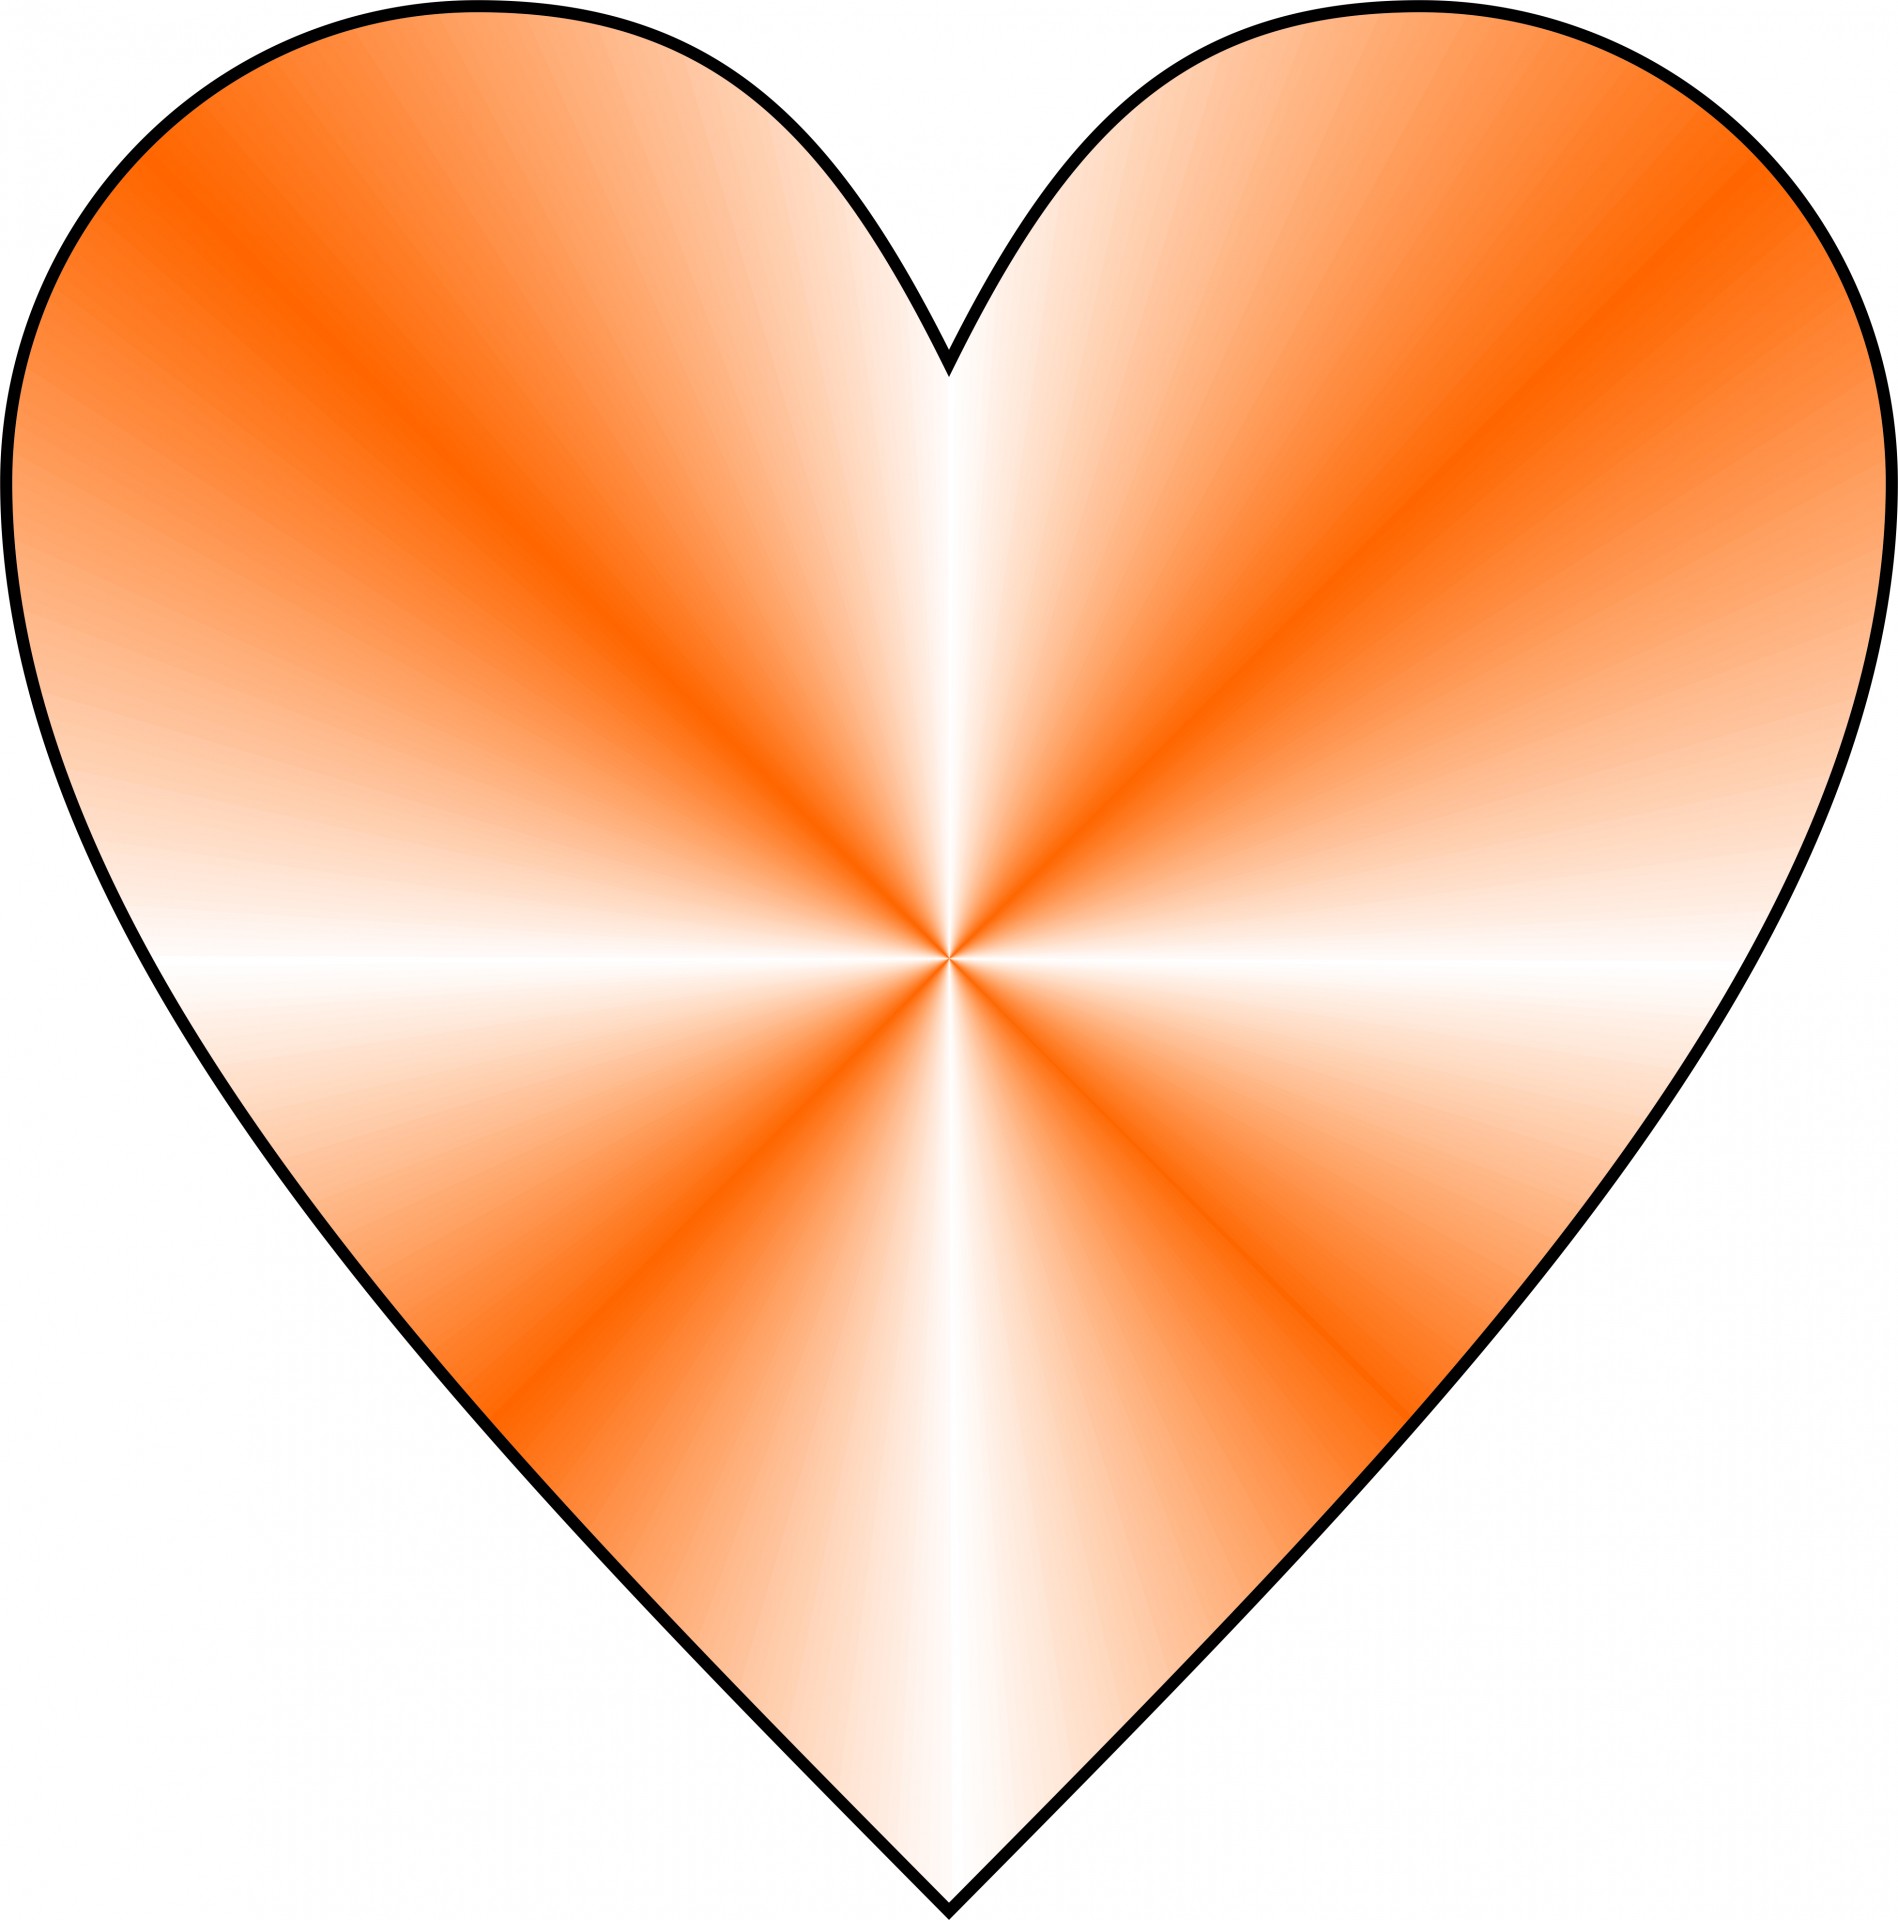 conical orange heart free photo